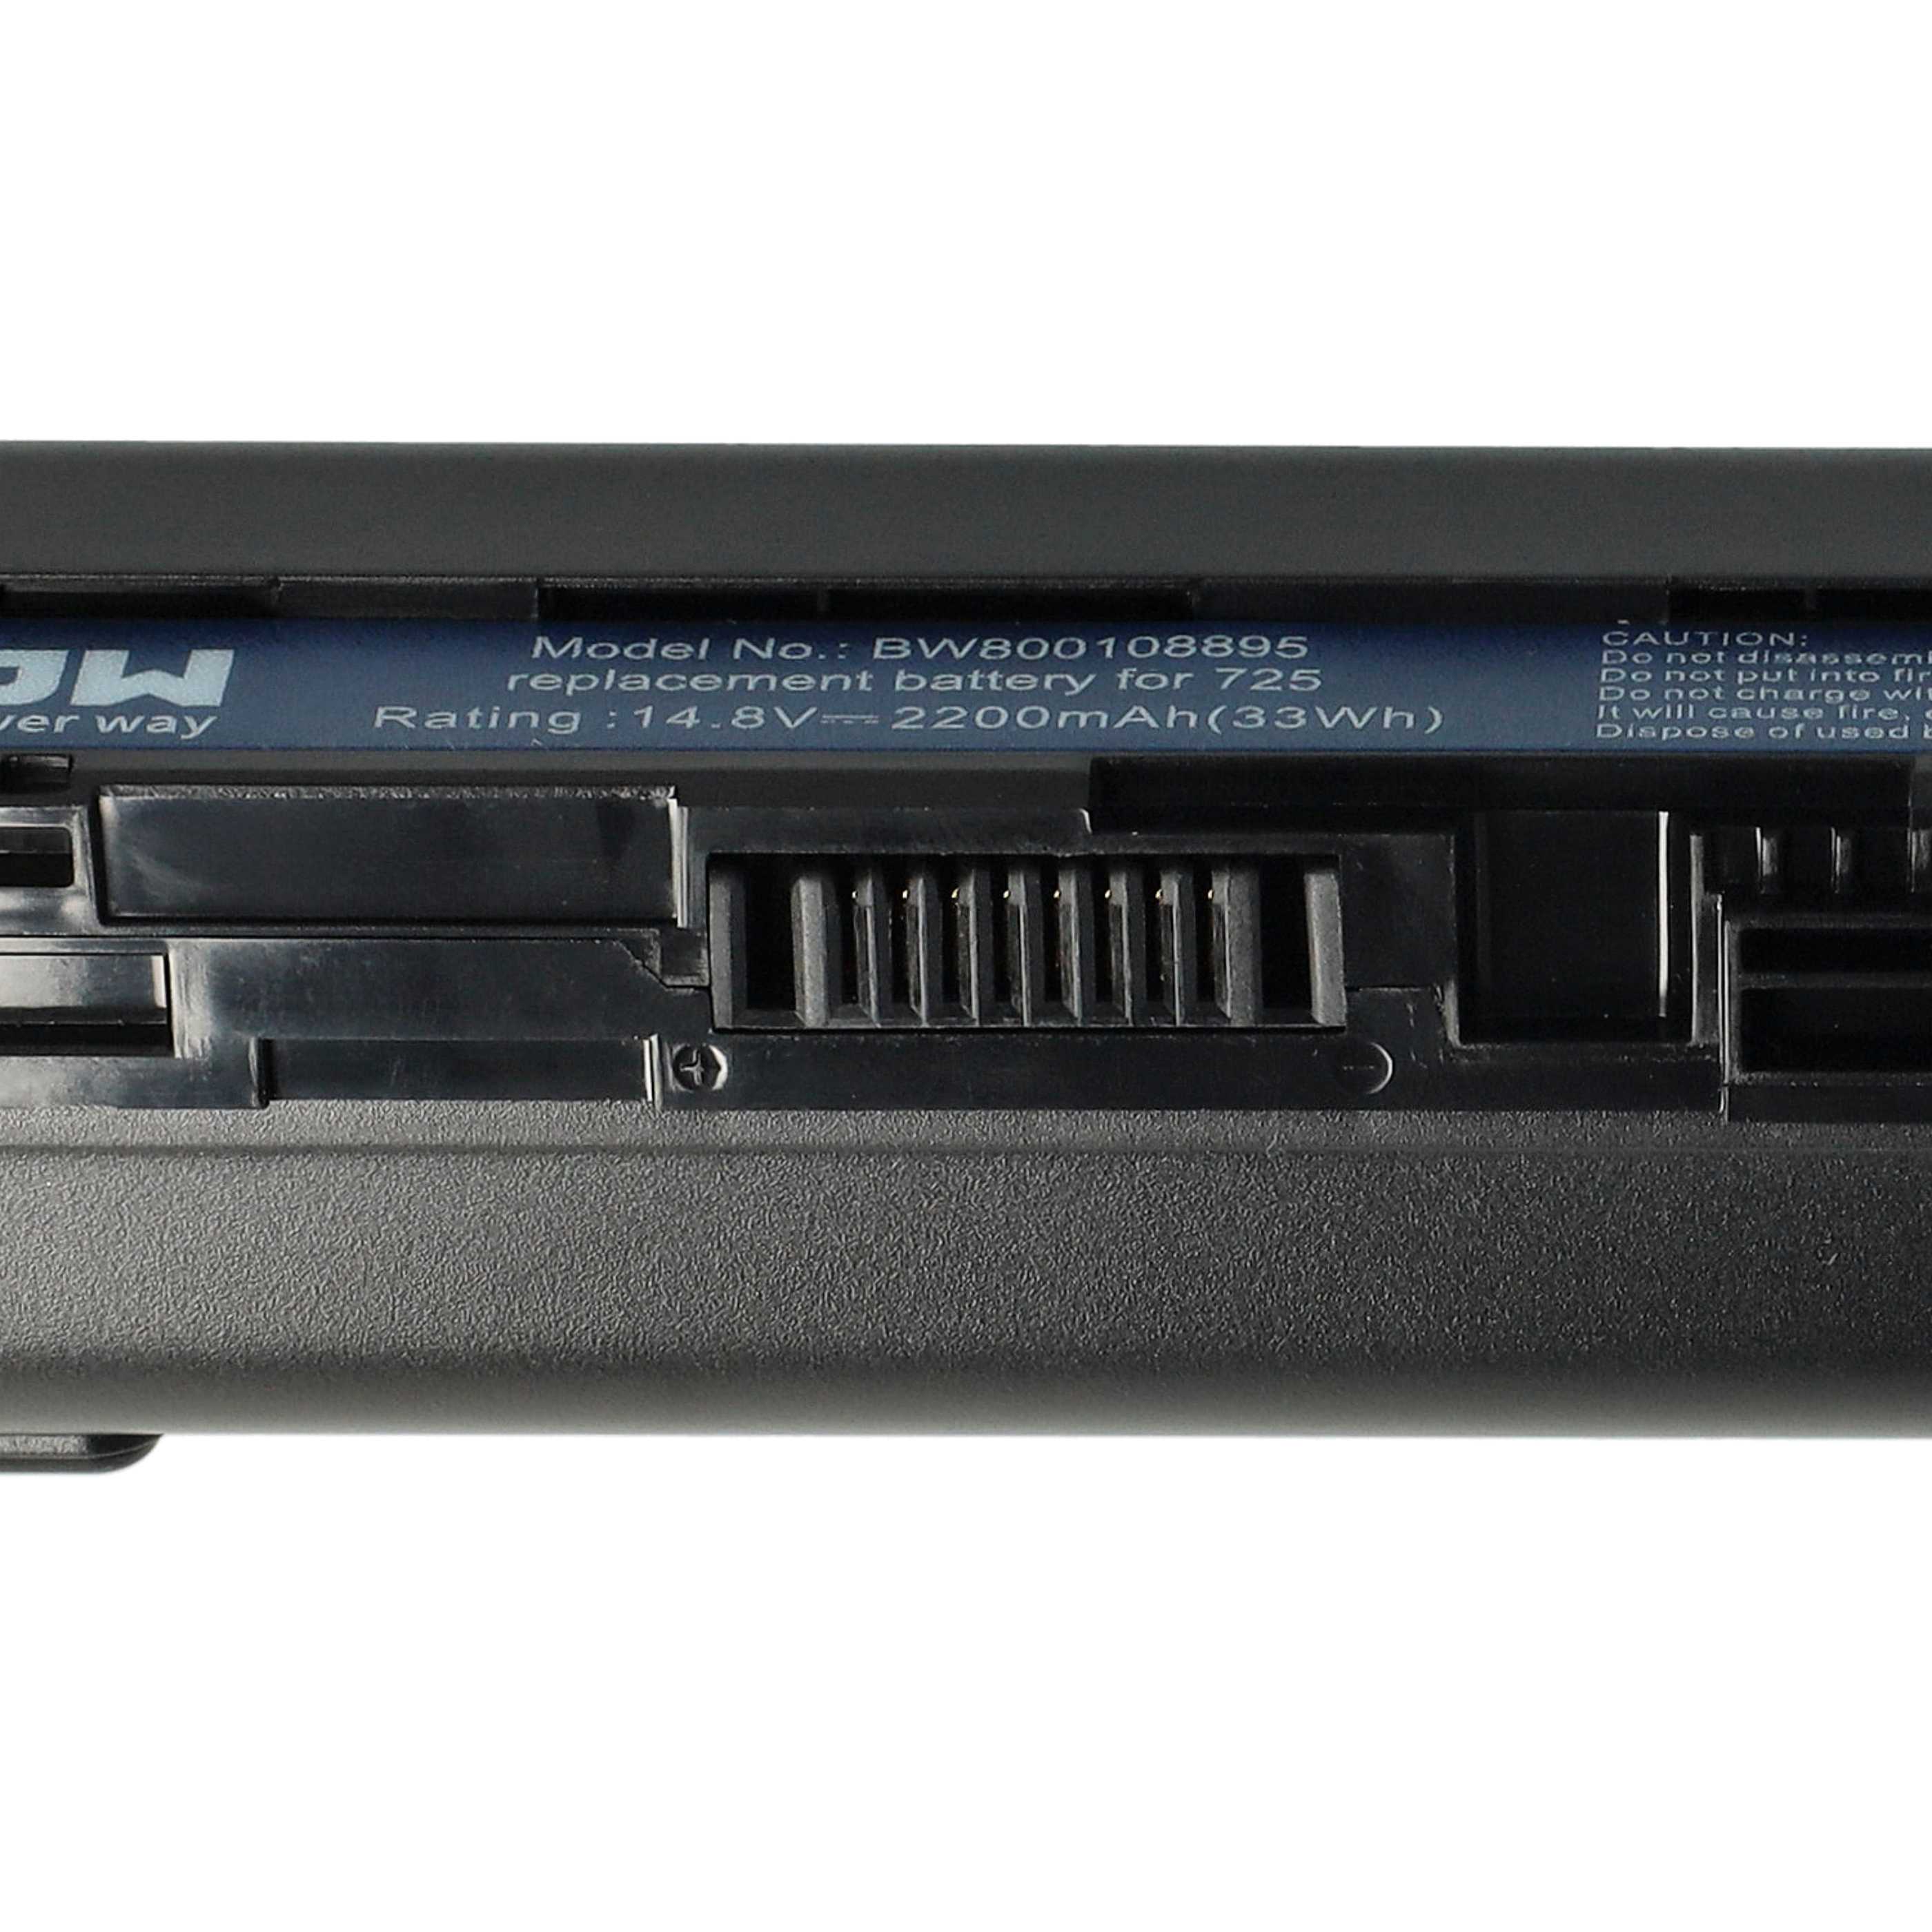 Akumulator do laptopa zamiennik Acer AL12B31, AL12B32, 4ICR17/65, AL12B72 - 2200 mAh 14,4 V Li-Ion, czarny